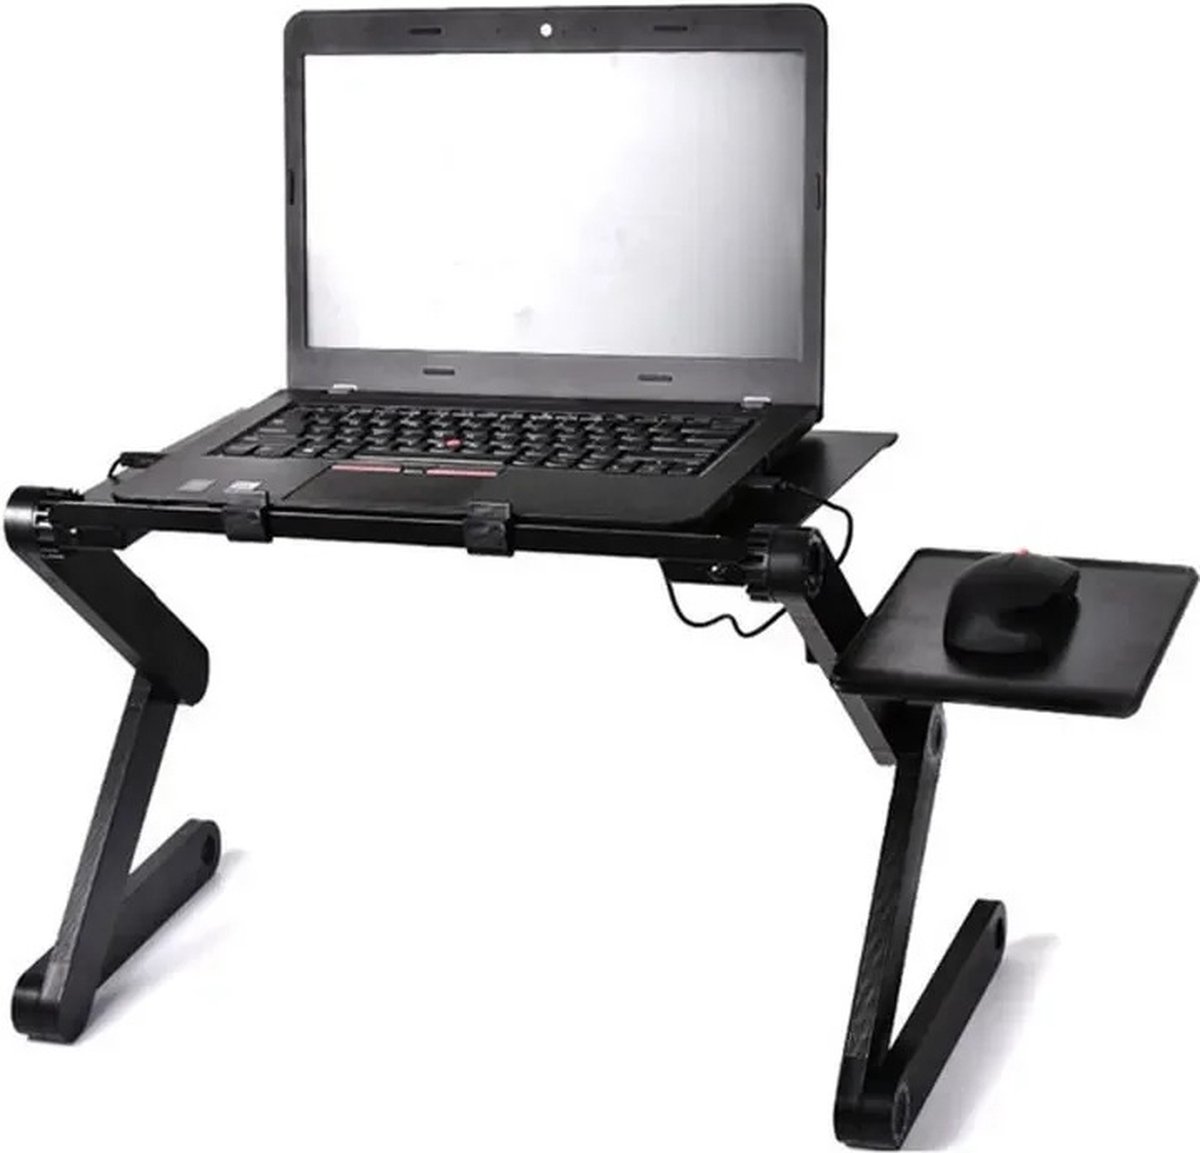 ValueStar - Verstelbare Laptoptafel - Laptoptafel - Laptopstandaard Voor In Bed - Verstelbaar Laptopbureau - Laptoptafel Met Variabele Hoogte - Veelzijdigheid - Draagbaar - Overal Te Gebruiken - Zwart